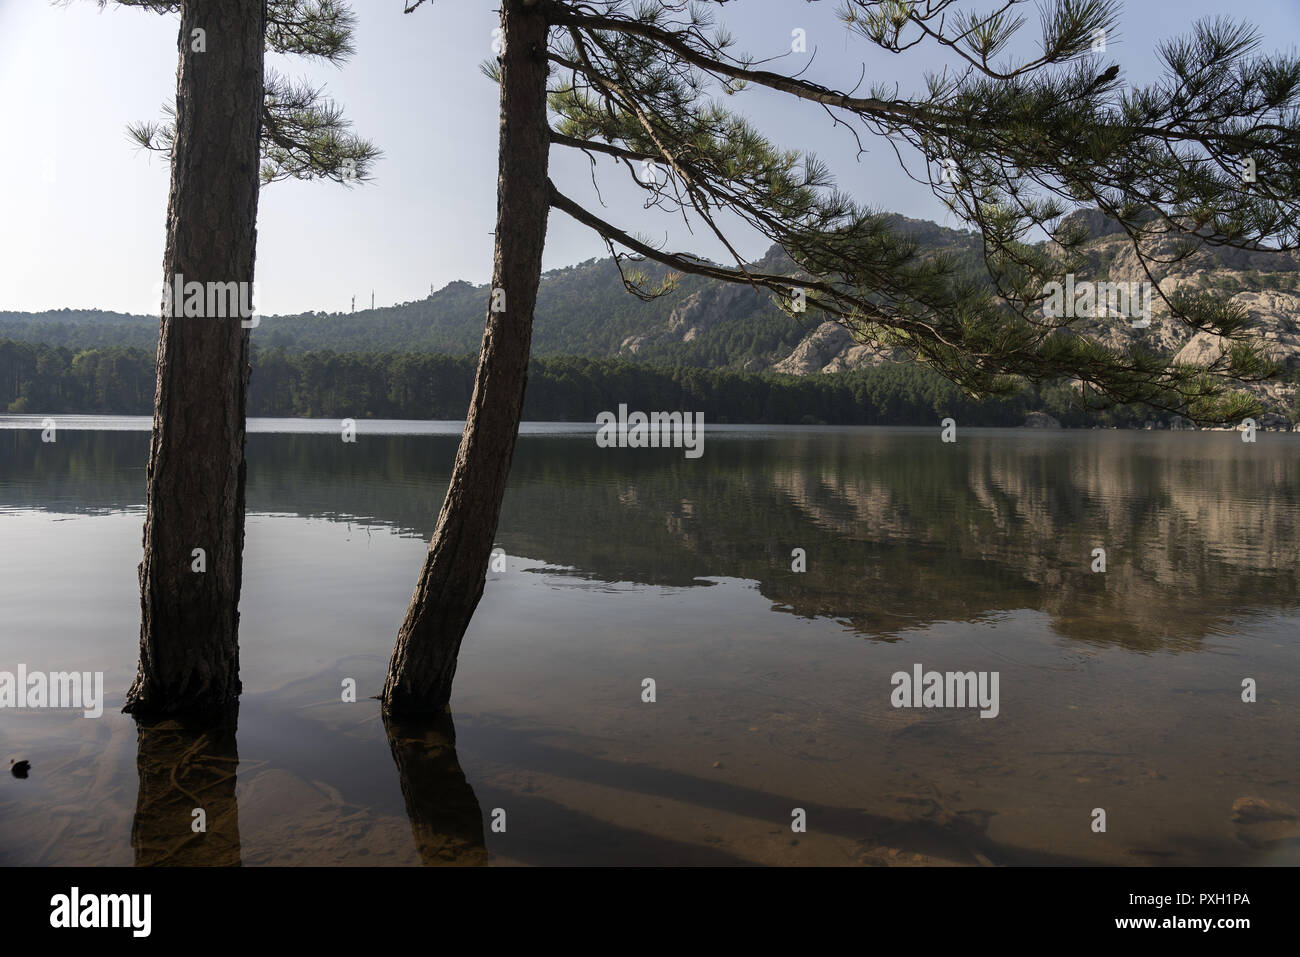 Reflected in the water of the mountains surrounding the Lac de L'Ospédale. Spiegelt sich im Wasser der Berge. Odbite w wodzie góry okalające jezioro. Stock Photo